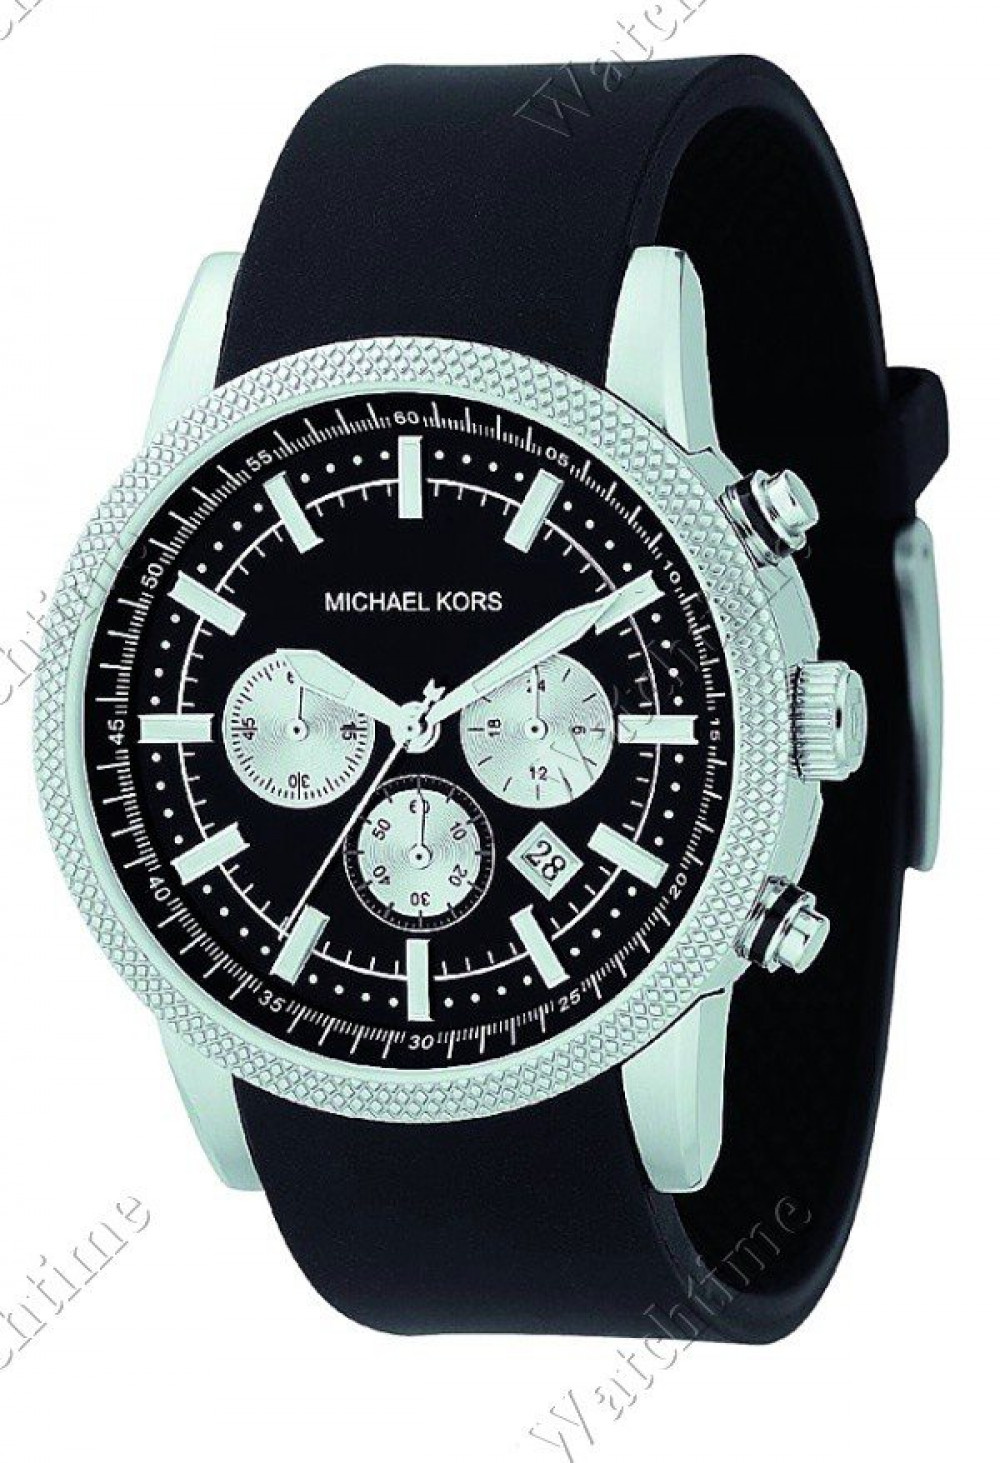 Zegarek firmy Michael Kors, model MK 8040